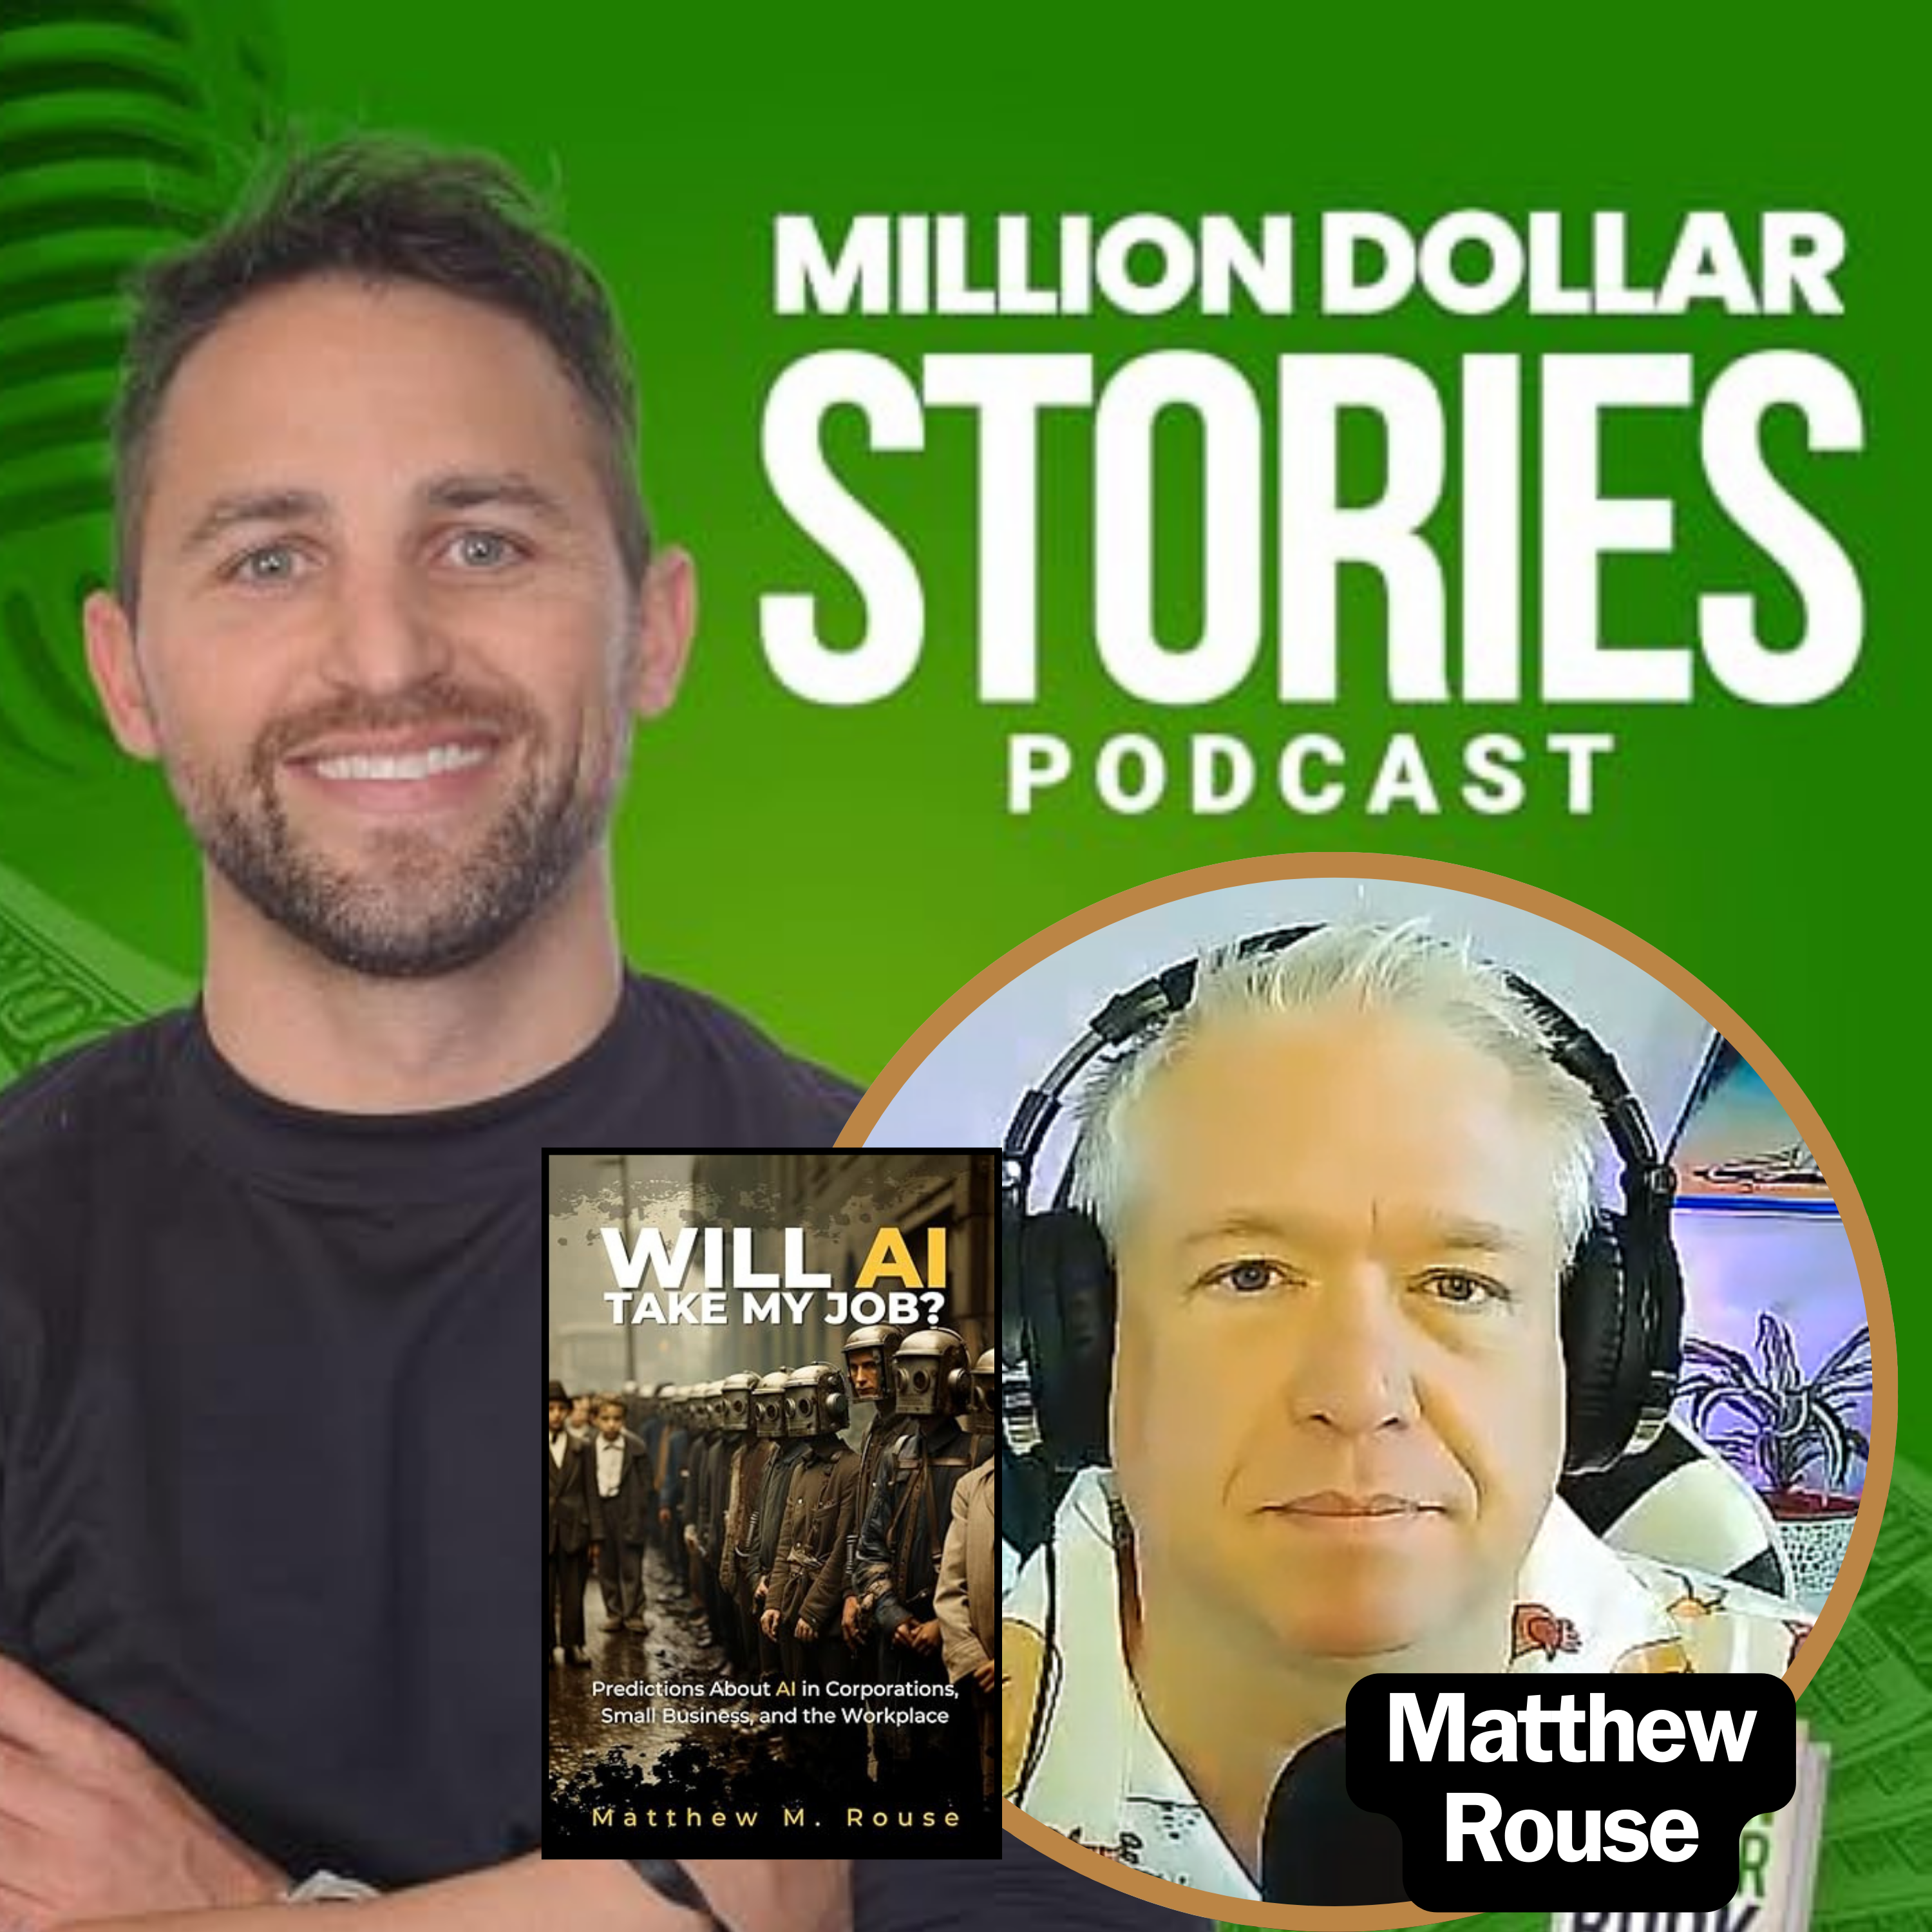 Matt Rouse – Author of “Will AI Take My Job”